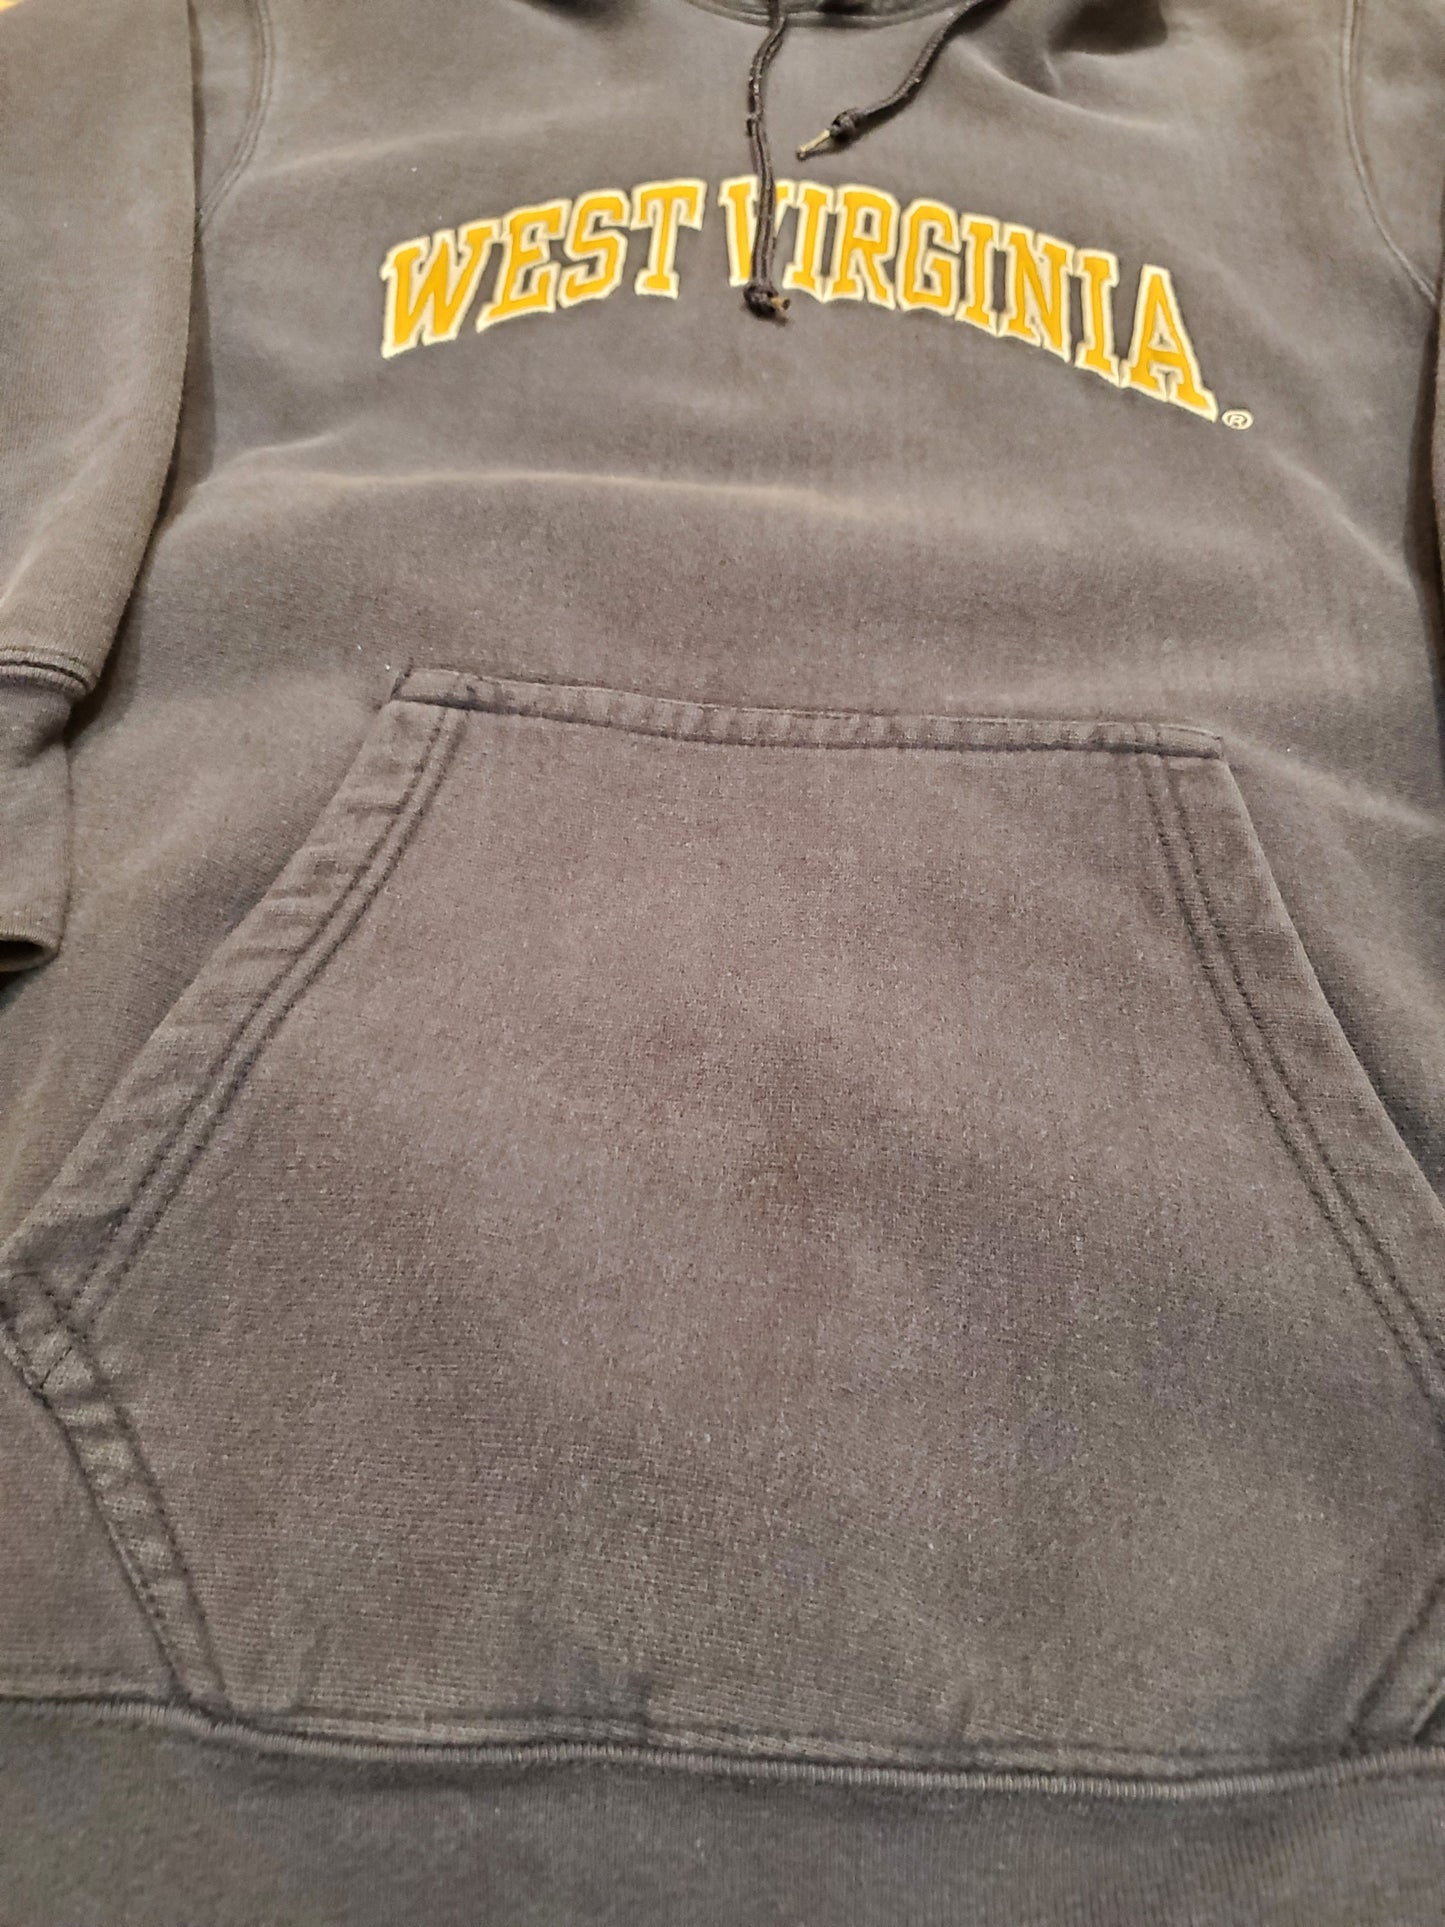 2000s Steve & Barry's West Virginia University Reverse Weave Style Hoodie Sweatshirt Size S/M